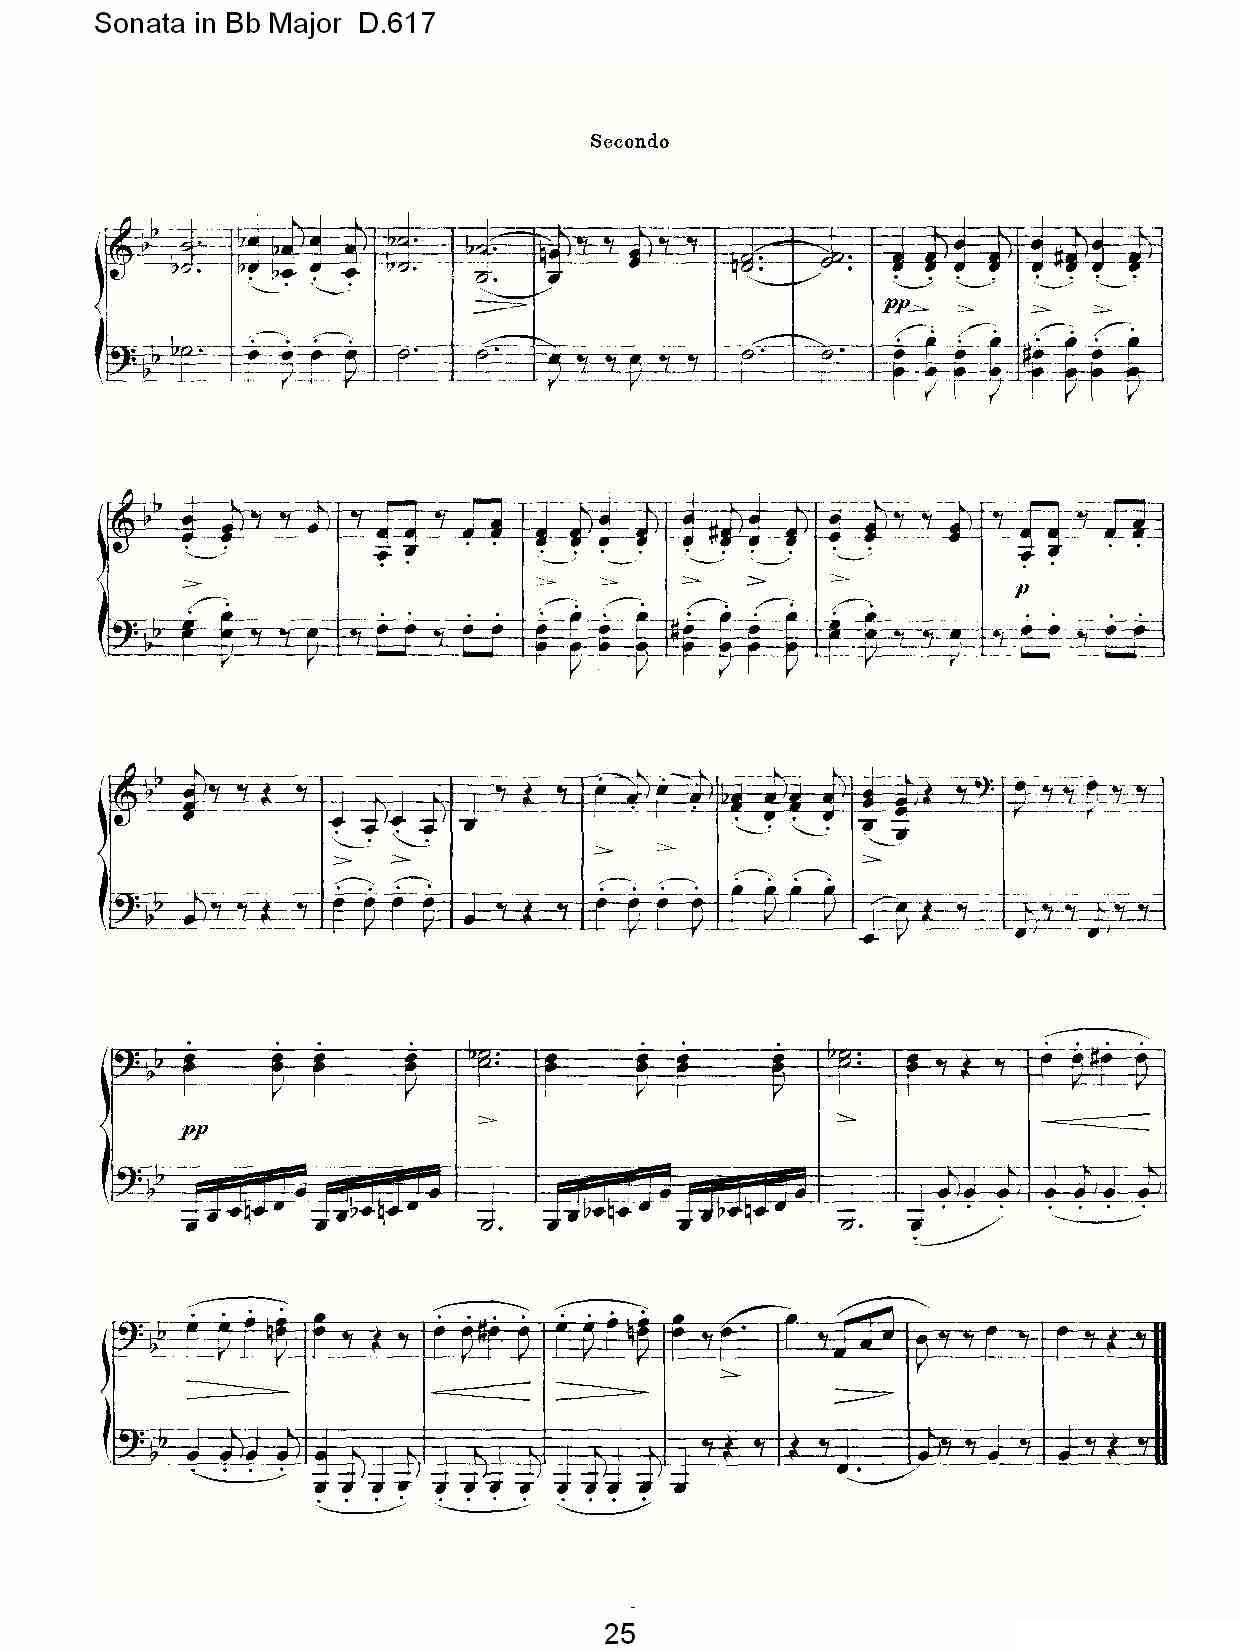 Sonata in Bb Major D.617（Bb大调奏鸣曲 D.617）钢琴曲谱（图25）